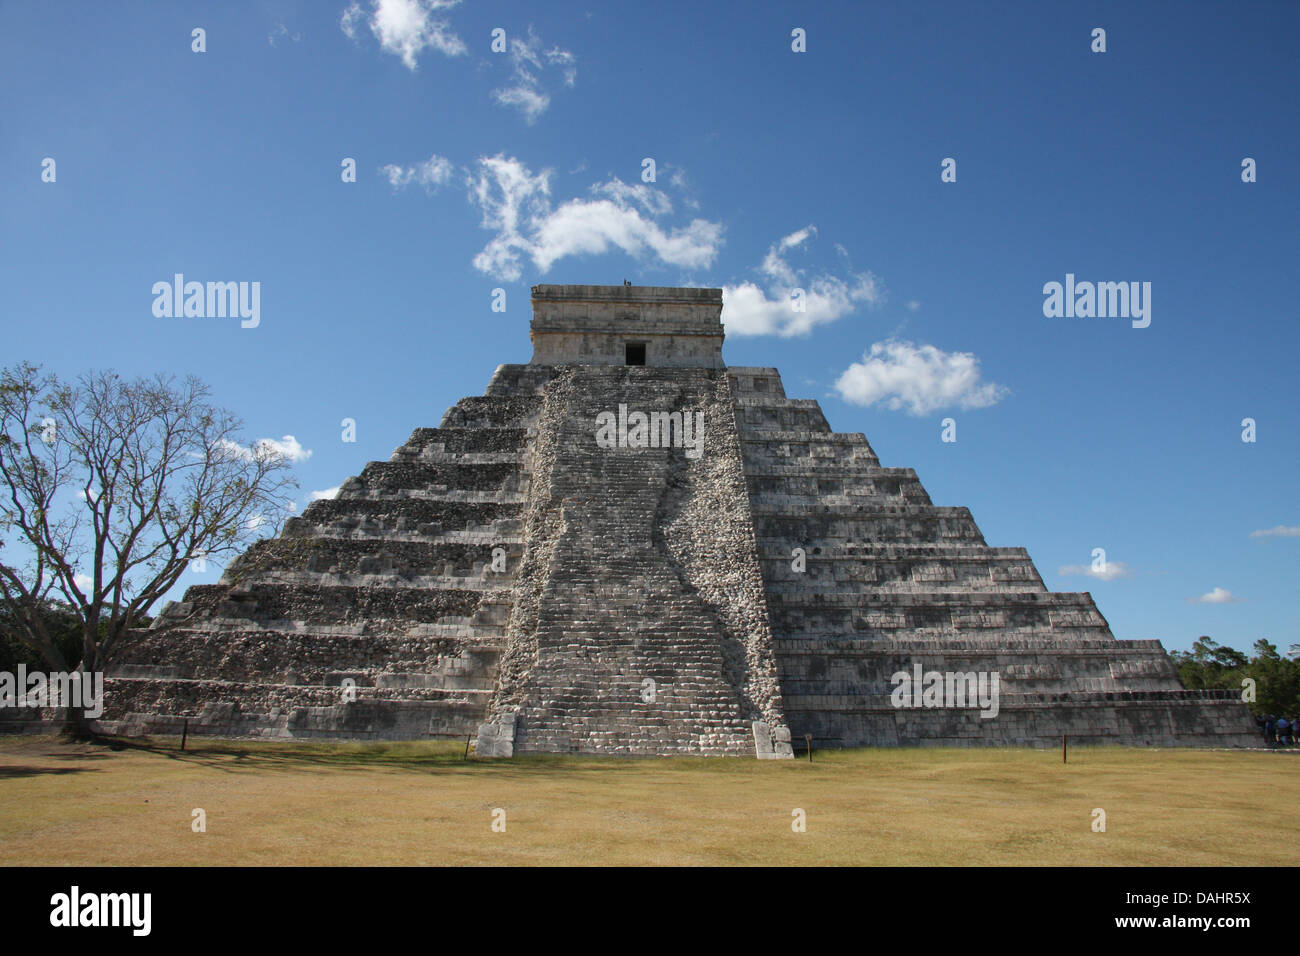 Mayan pyramid hi-res stock photography and images - Alamy